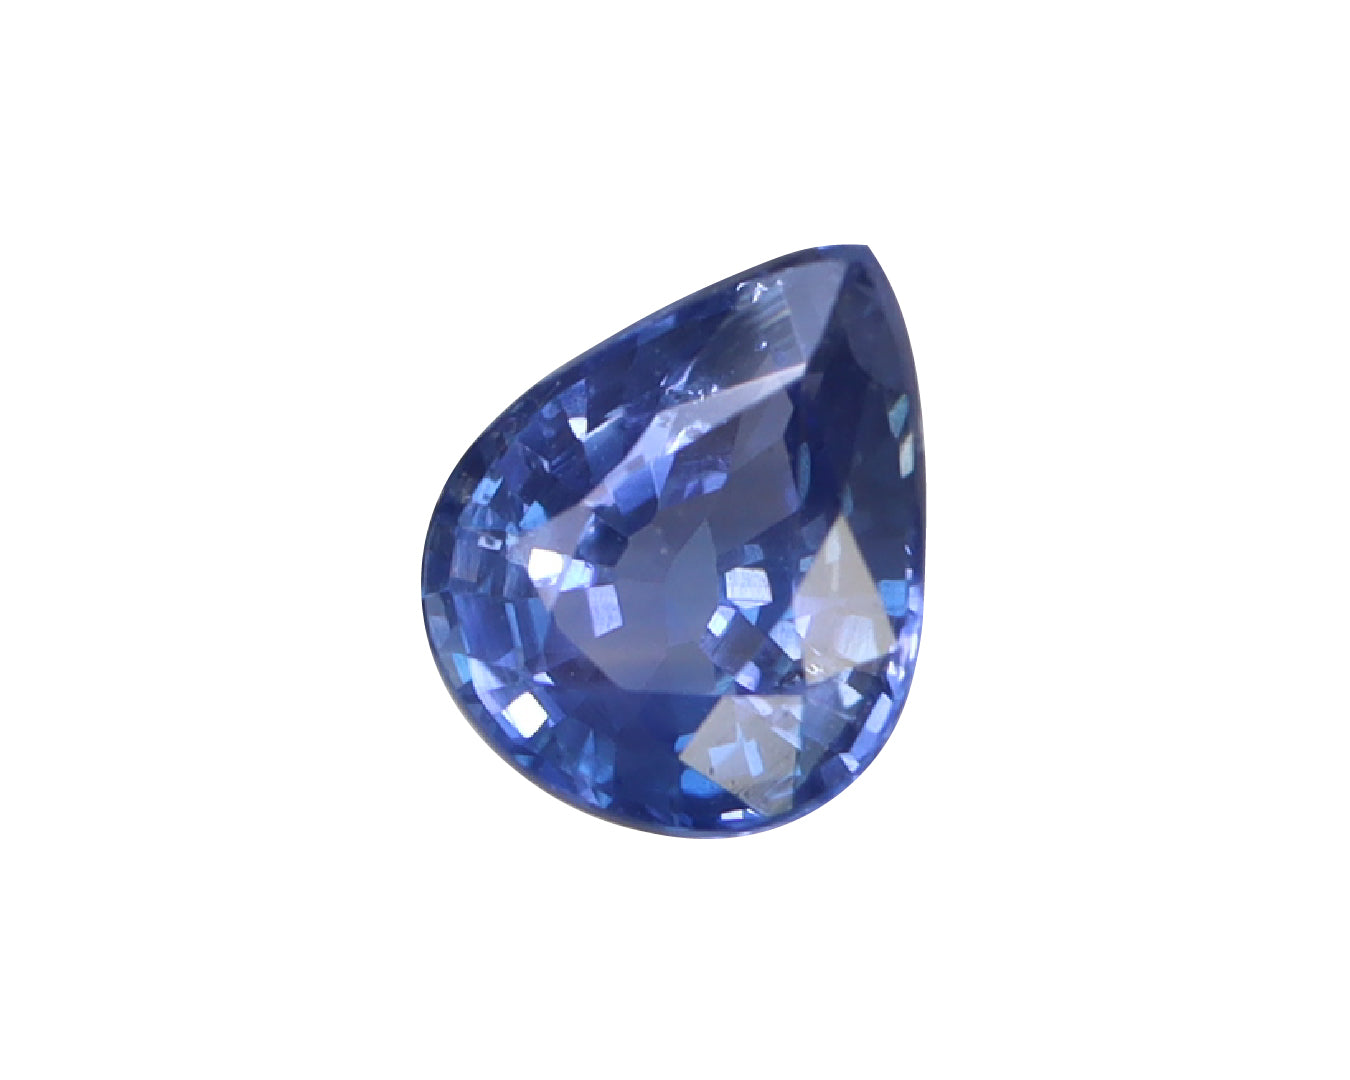 Piedra Zafiro Azul 0.57cts S-1018